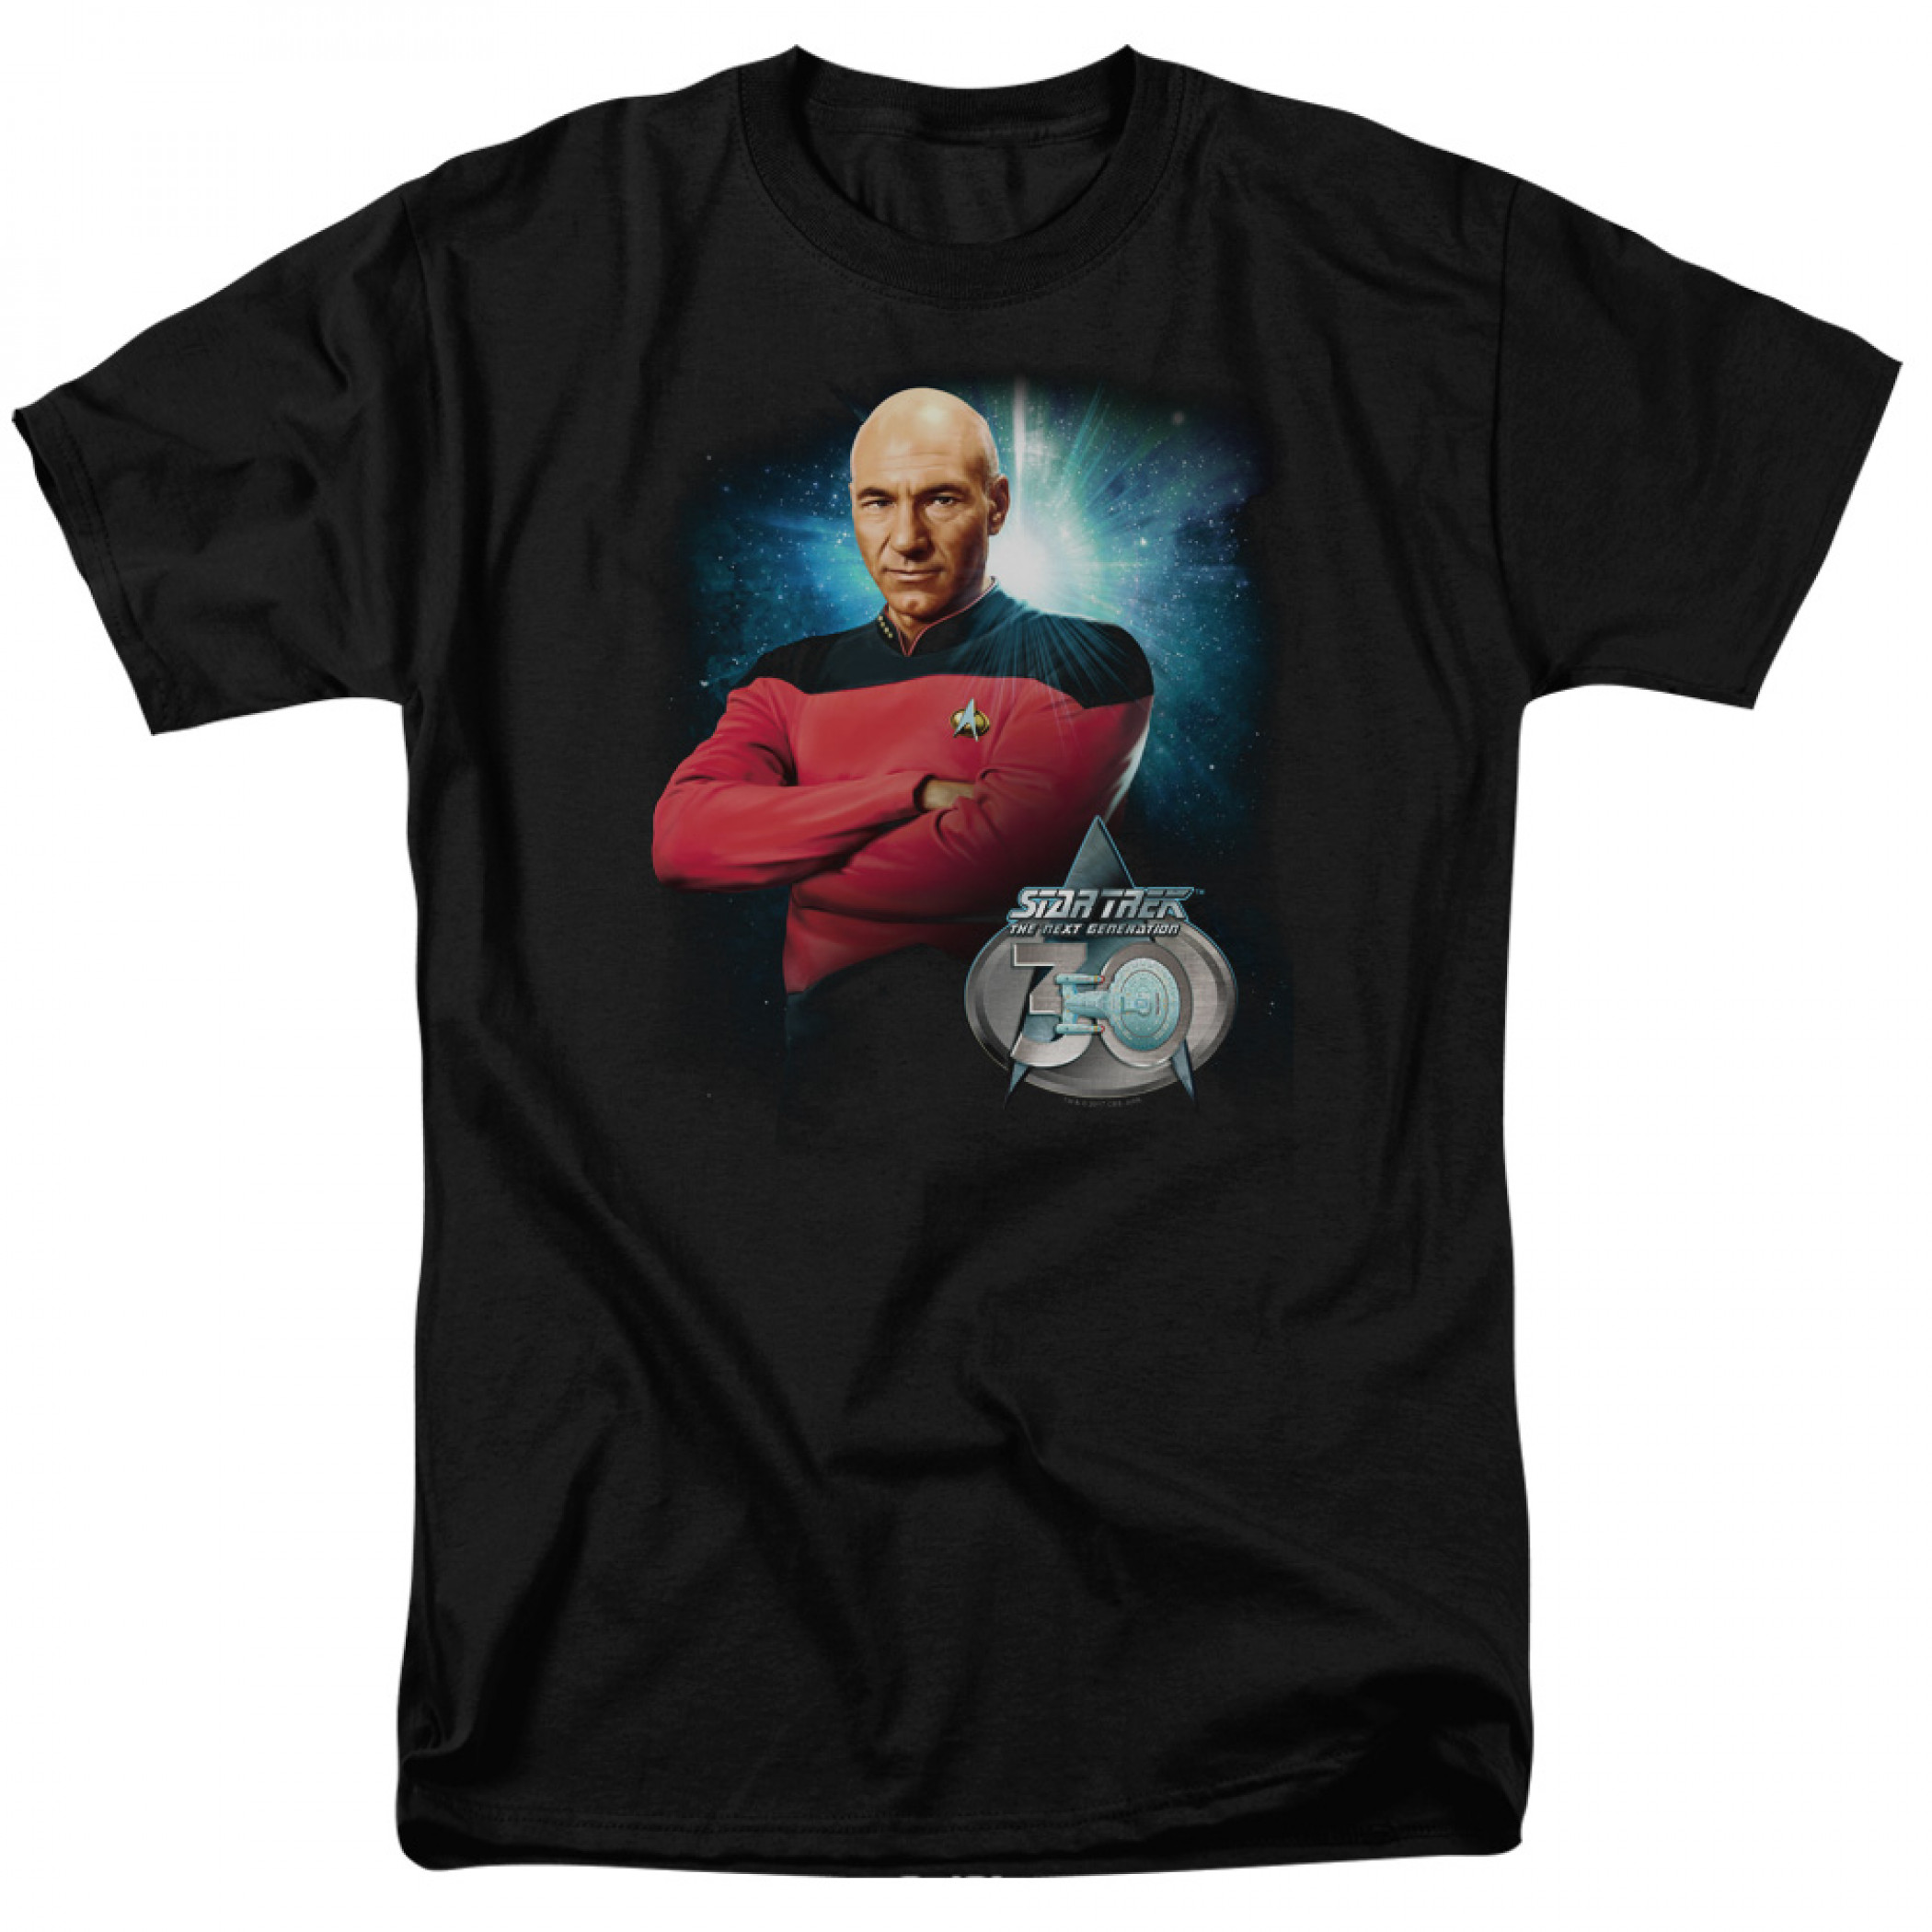 Star Trek Picard 30th Anniversary T-Shirt